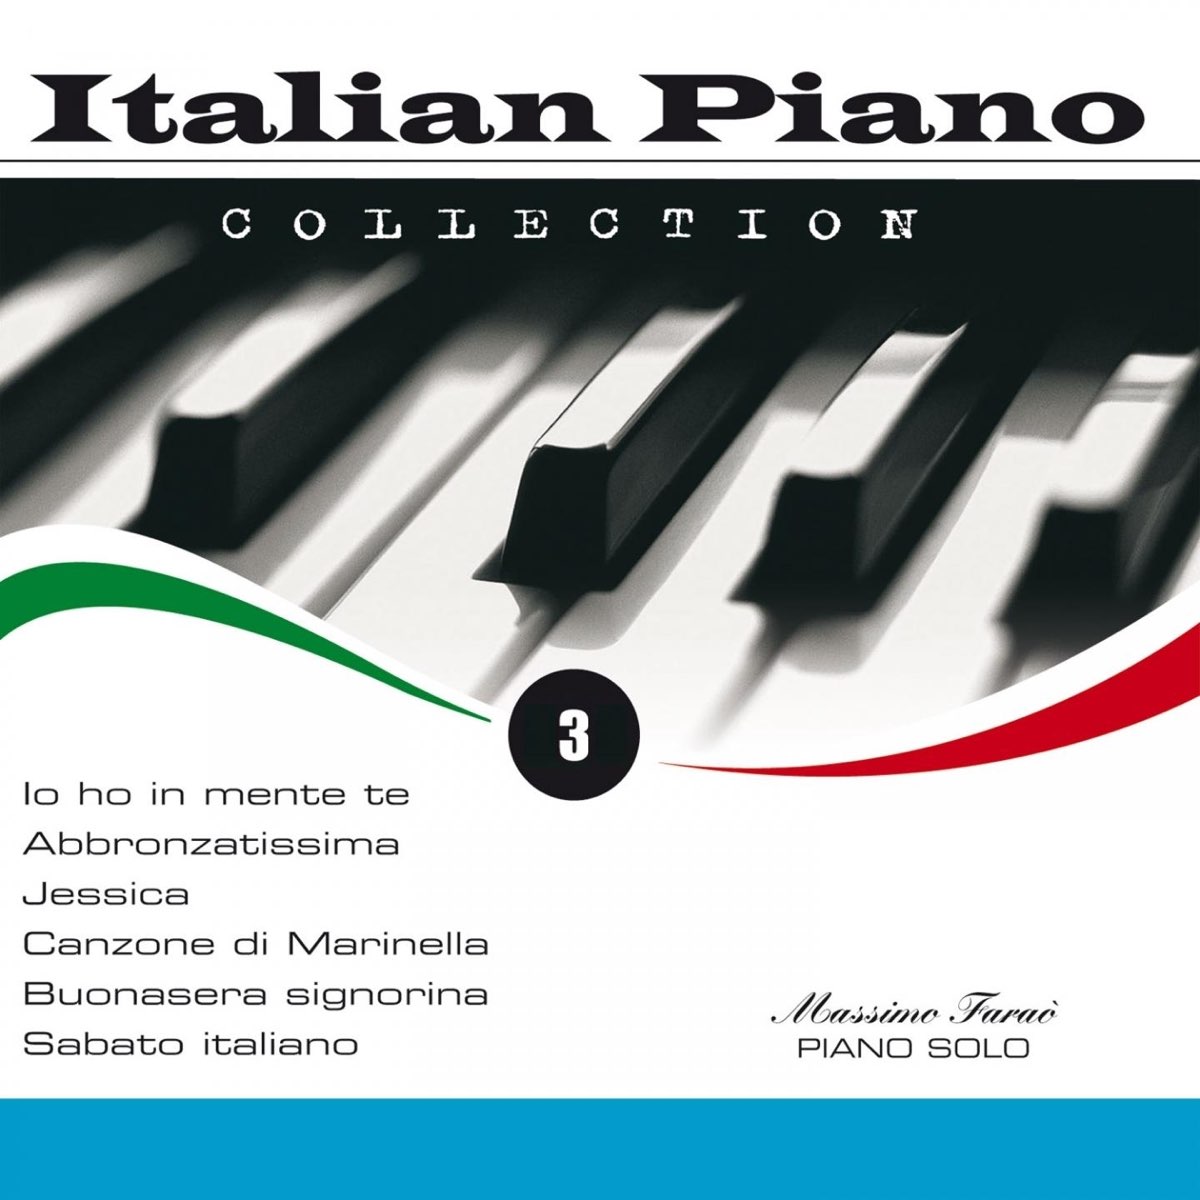 Italian Piano Collection, Vol. 3 by Massimo Faraò on Apple Music